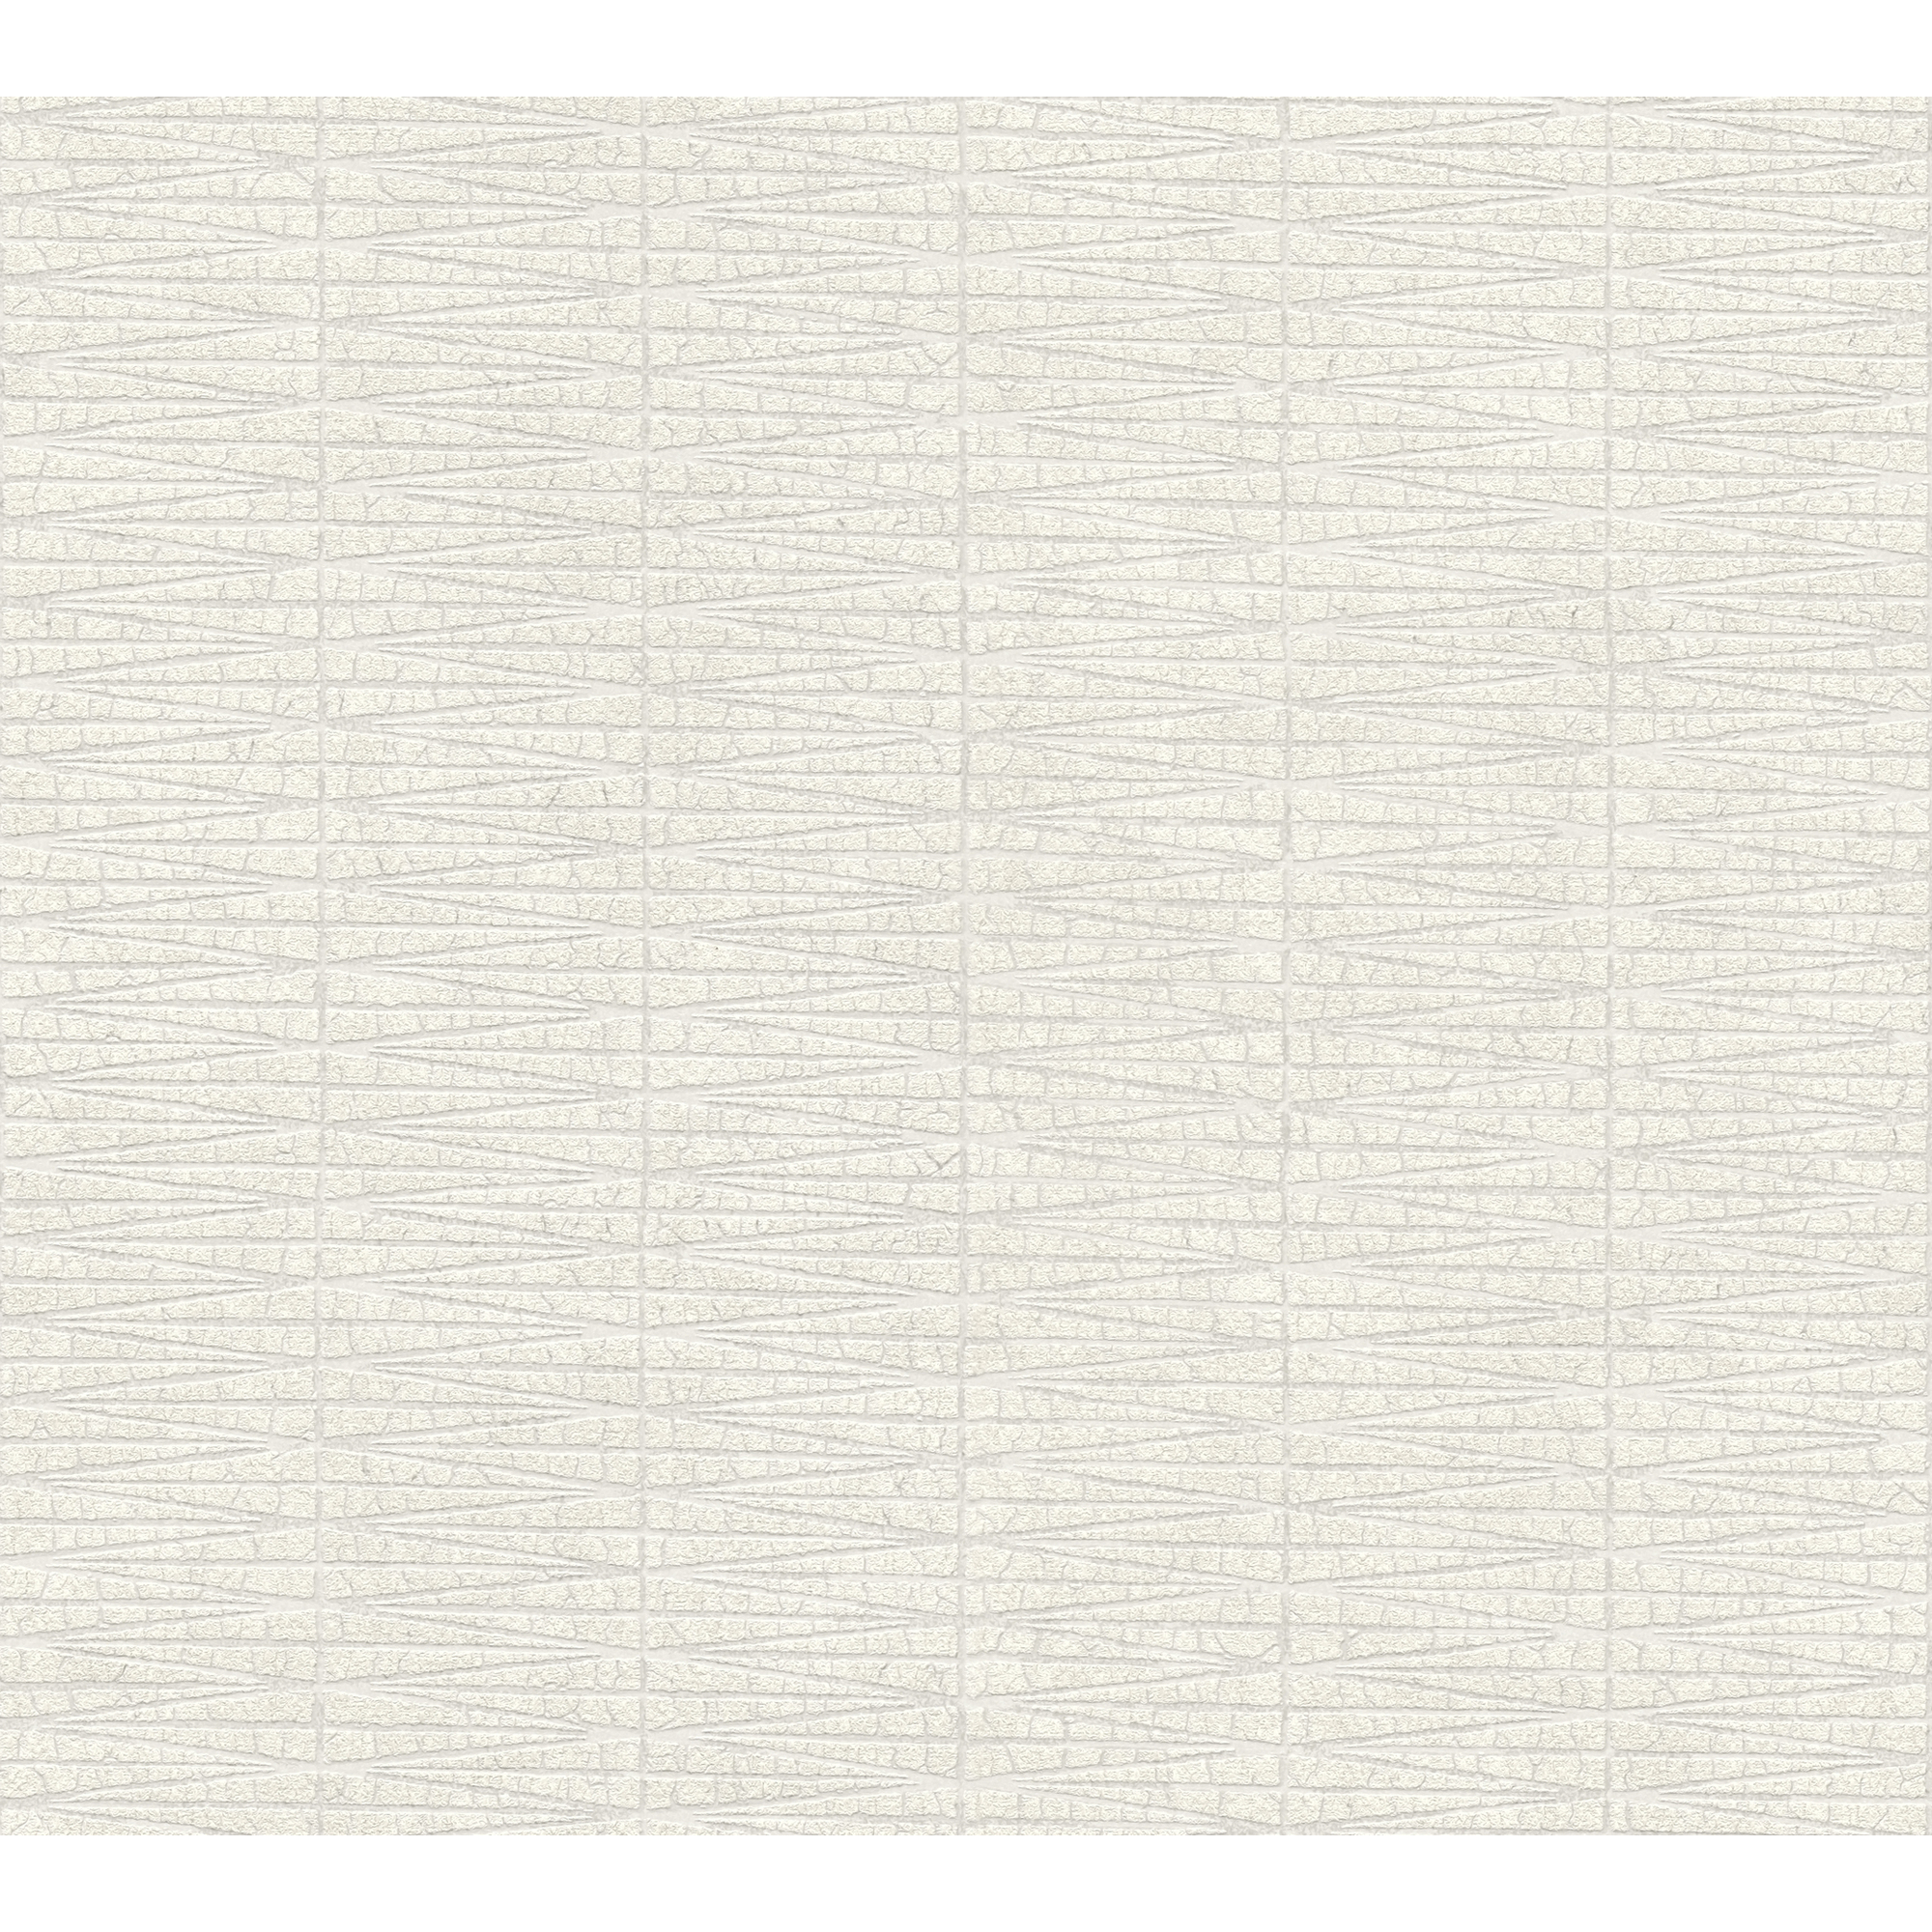 Vliestapete 'Hygge 2' Linienmuster weiß/grau 10,05 x 0,53 m + product picture